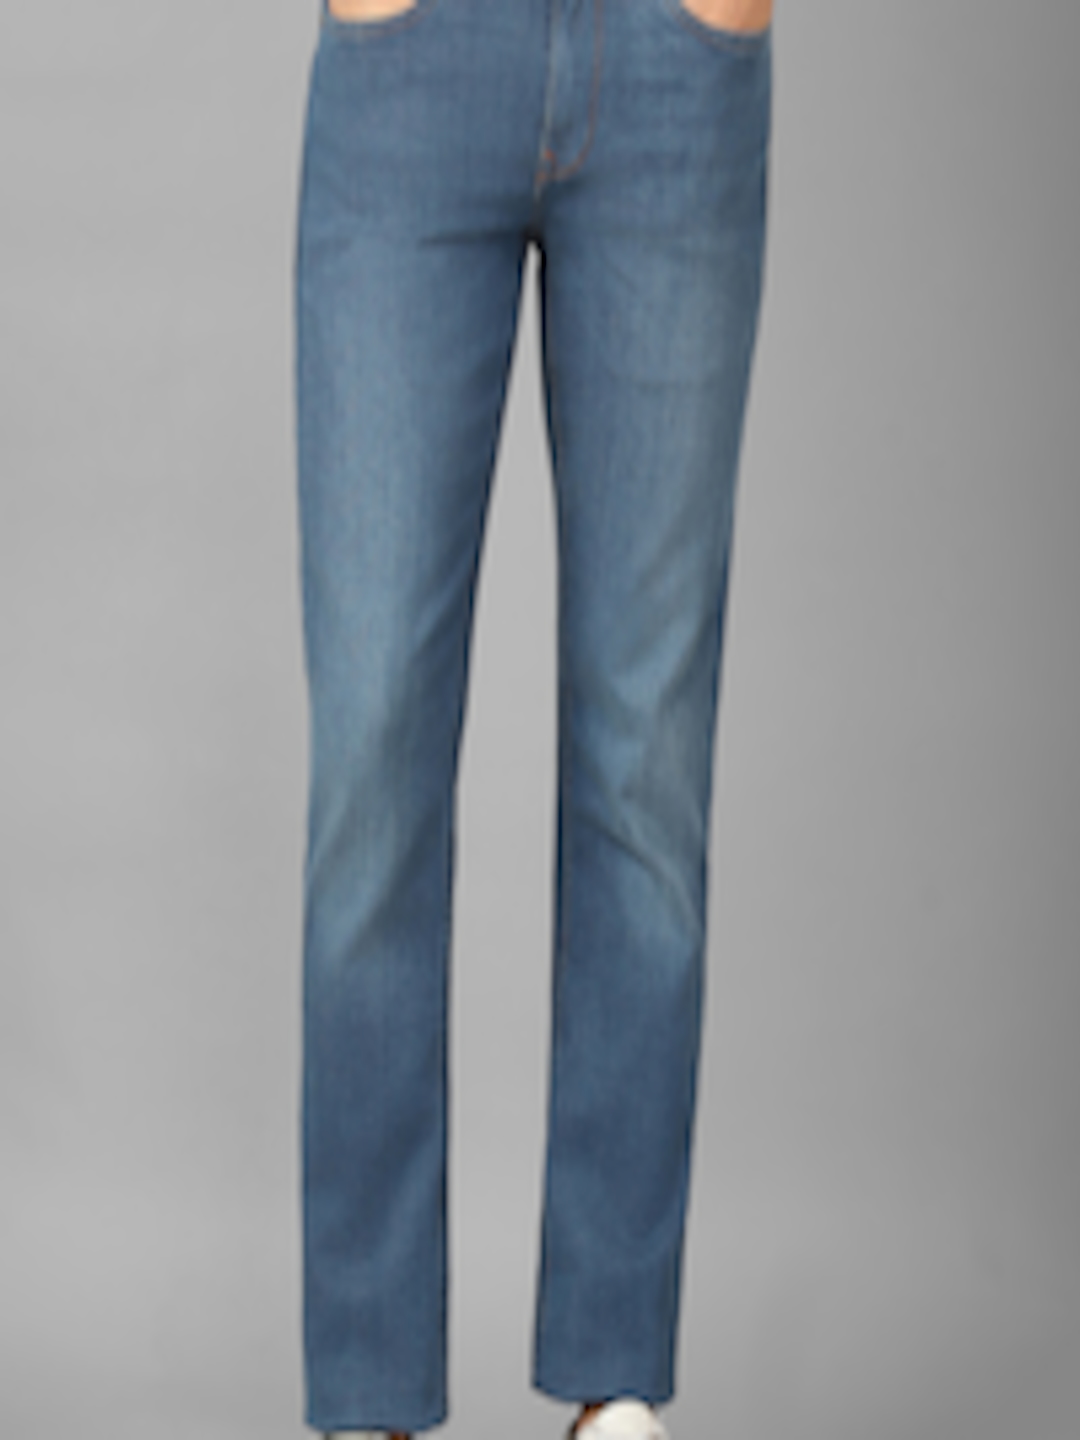 Buy Louis Philippe Jeans Men Mid Rise Slim Fit Clean Look Light Fade ...